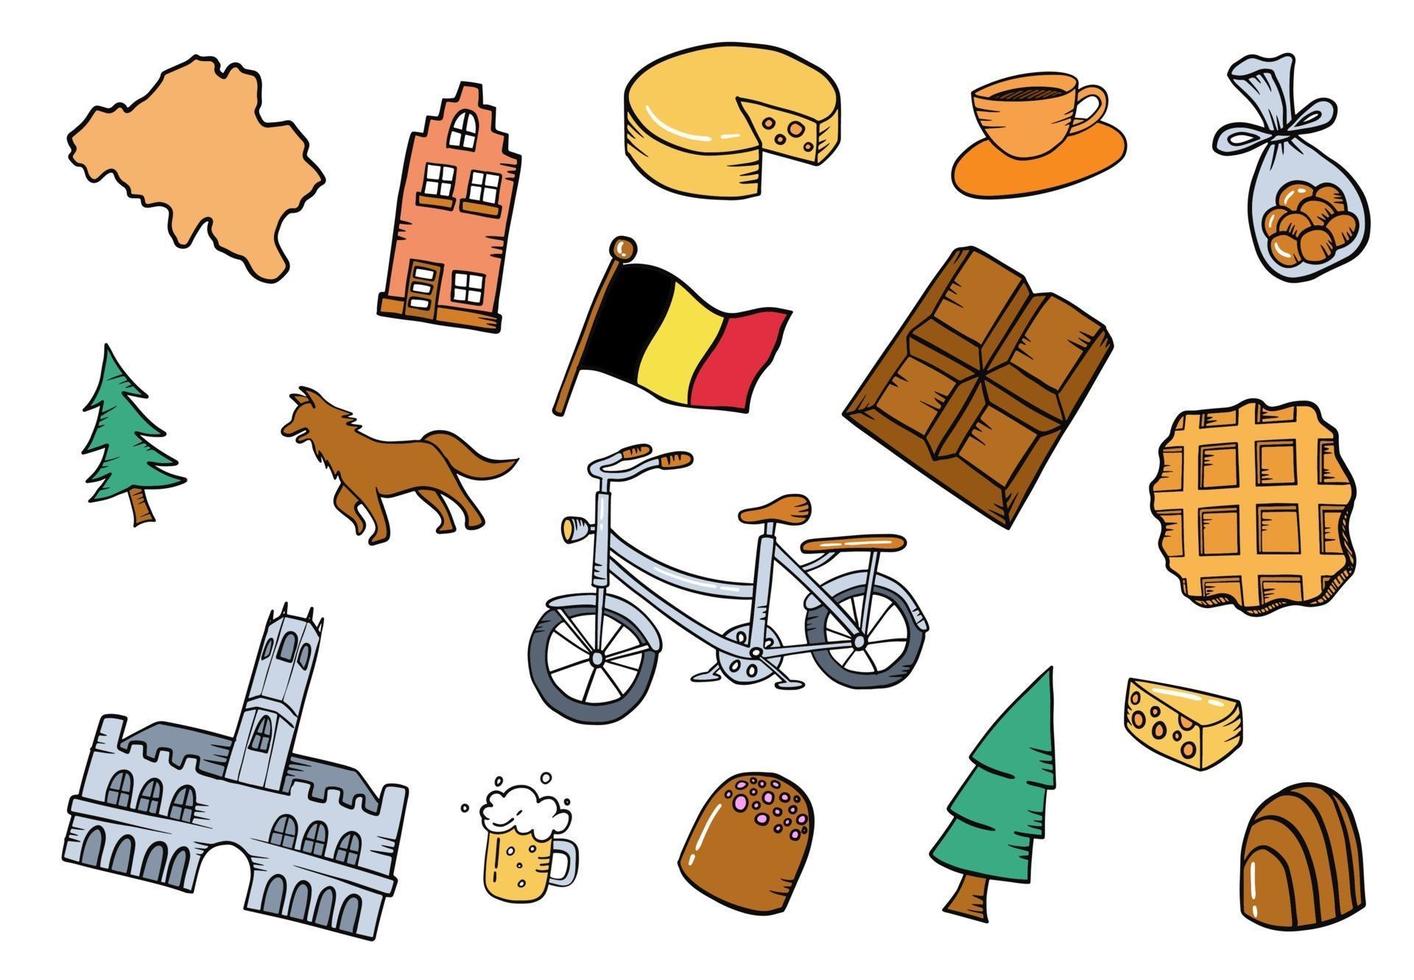 Bélgica o Bélgica país nación doodle conjunto de colecciones dibujadas a mano vector